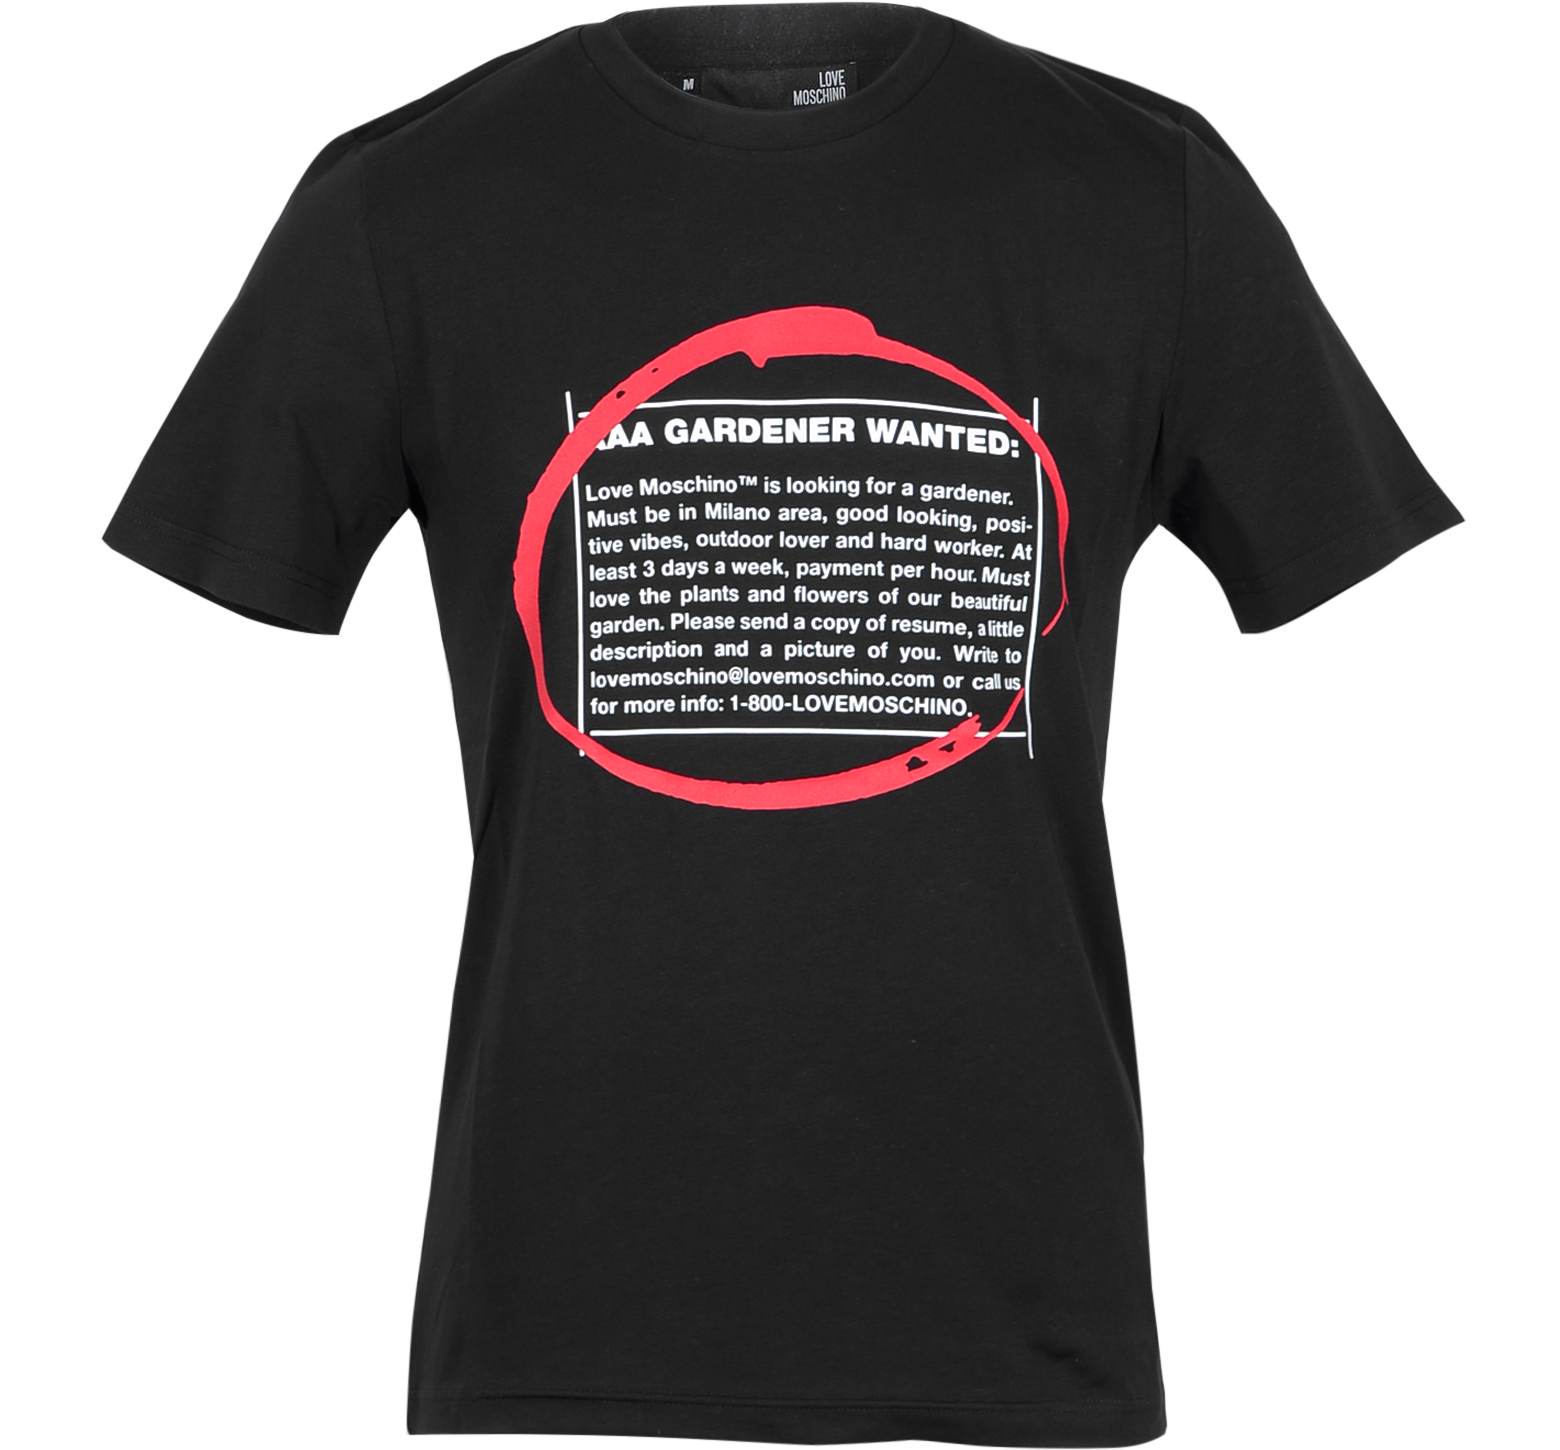 MOSCHINO, Black Men's T-shirt